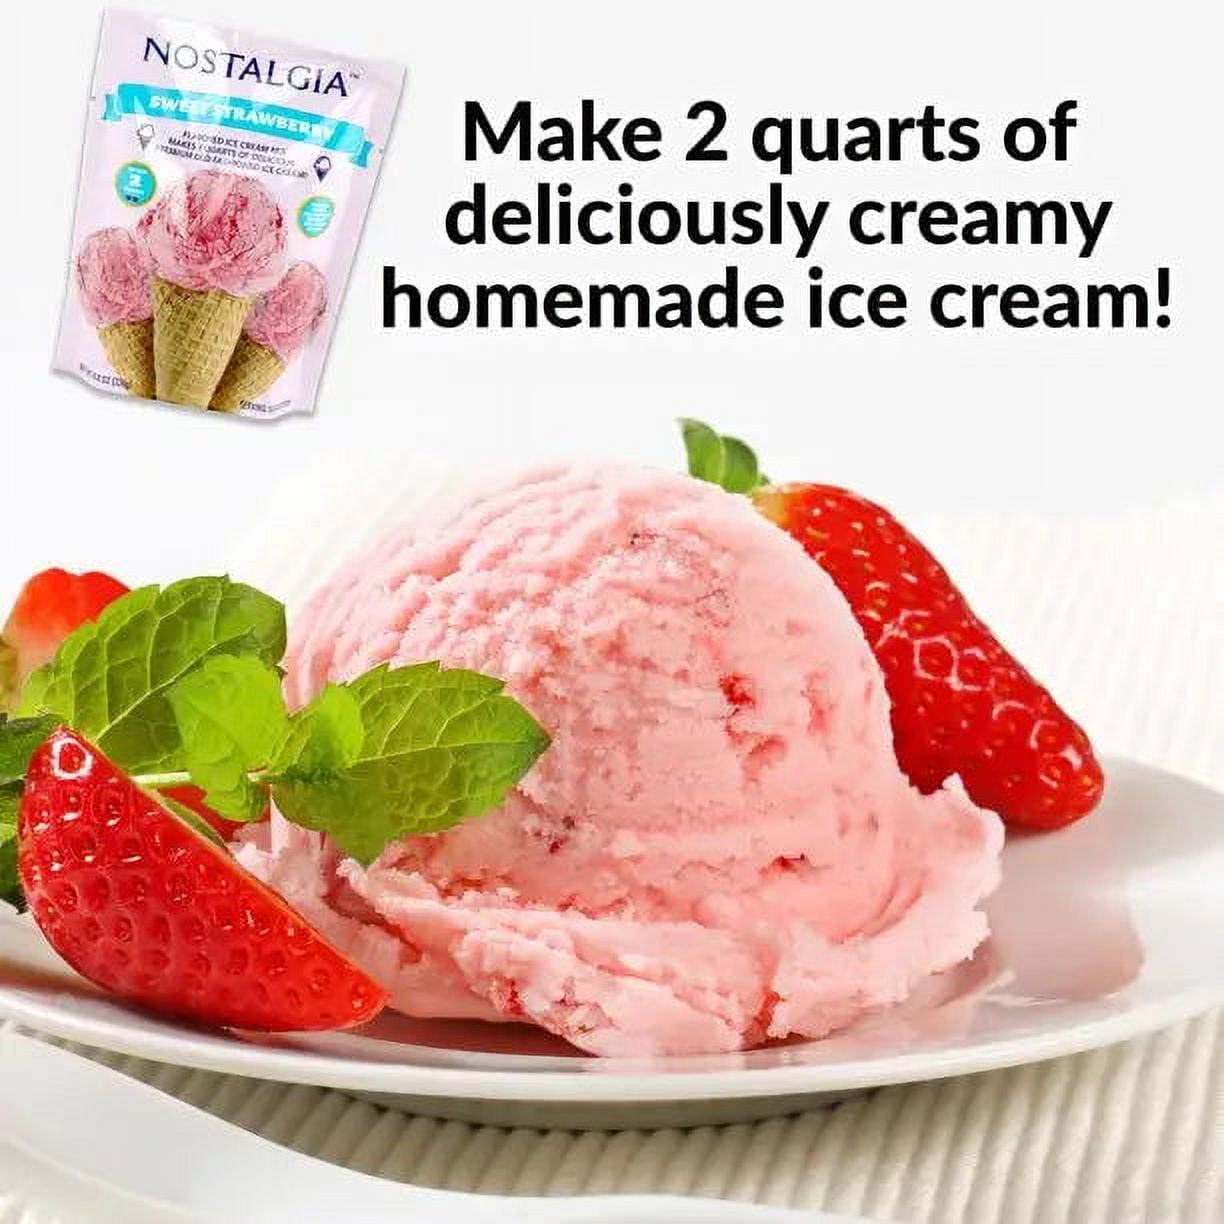 Williams Sonoma Ice Cream Starter - Strawberry, Homemade Ice Cream